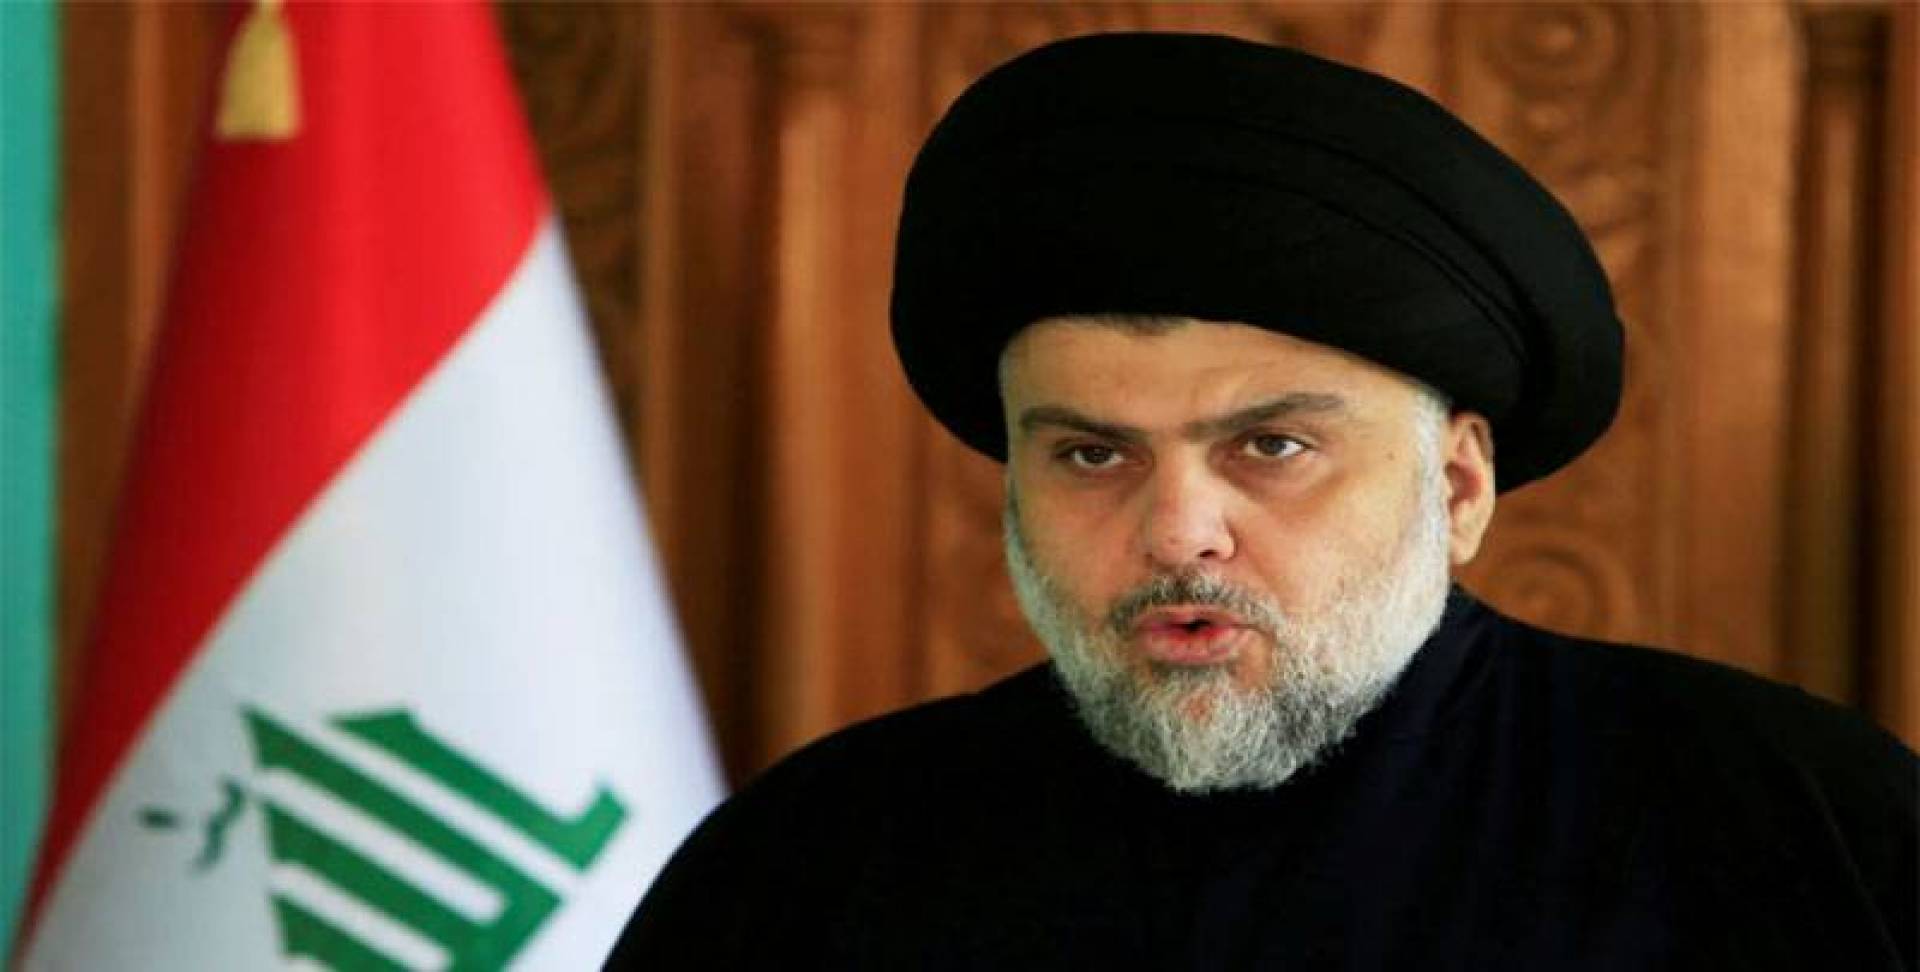 Iraq's media commission closes "al-Baghdadia" TV channel